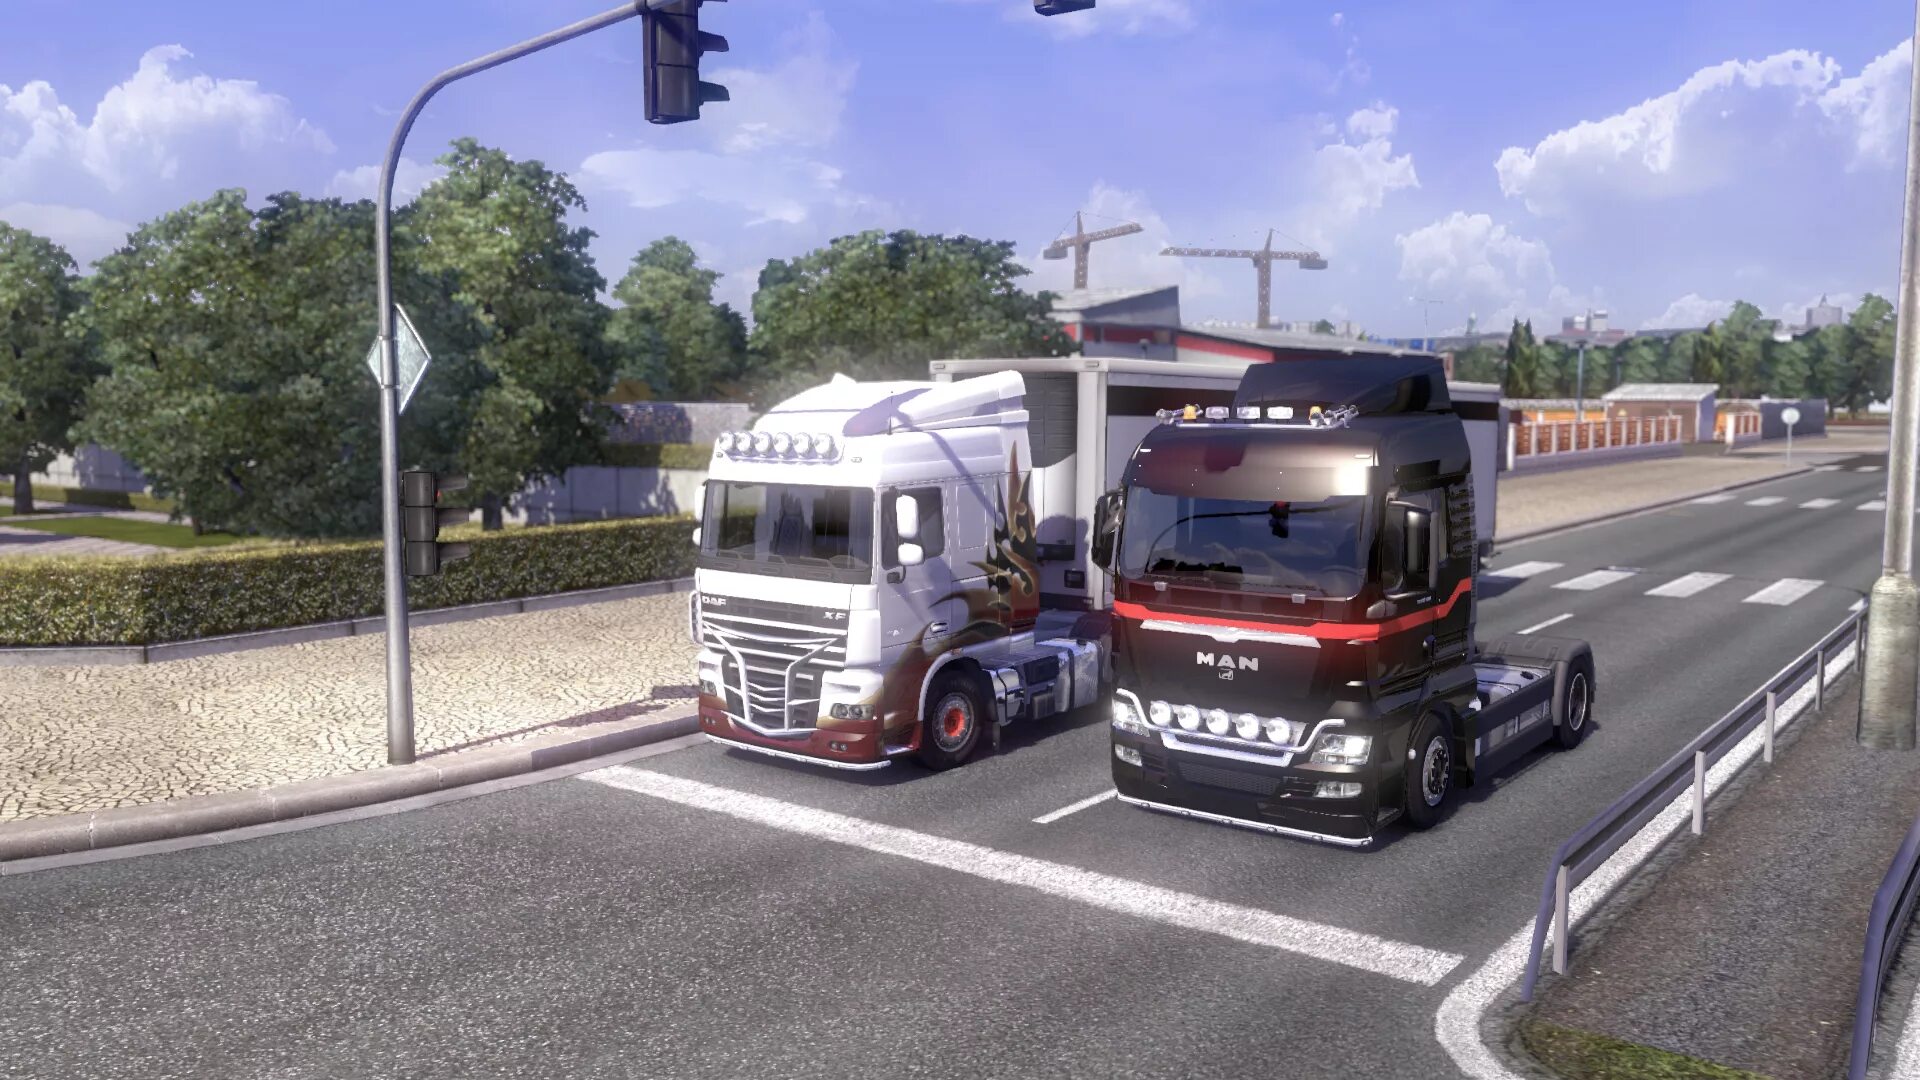 Ets 2 world. Евро трак симулятор 1. Euro Truck Simulator 2. Симулятор евро трек симулятор 2. Евро трак симулятор 2 2012.